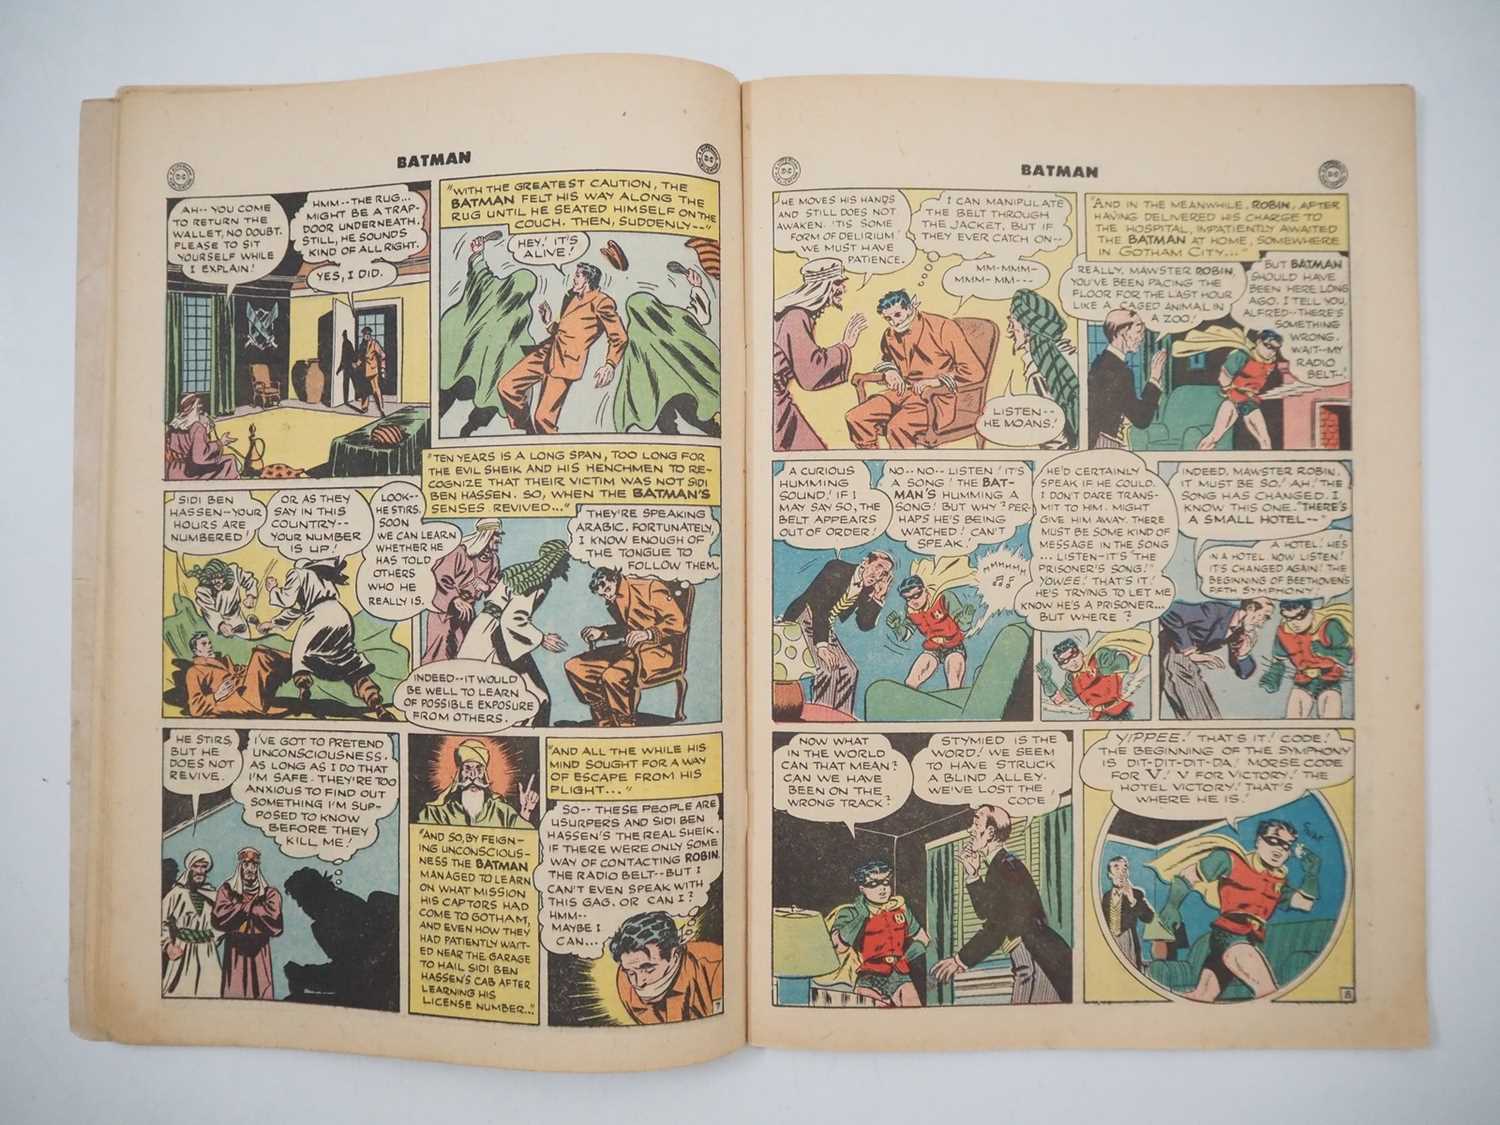 BATMAN #25 (1944 - DC) - First time that two major Batman villains (Joker and Penguin) team-up - - Image 14 of 37